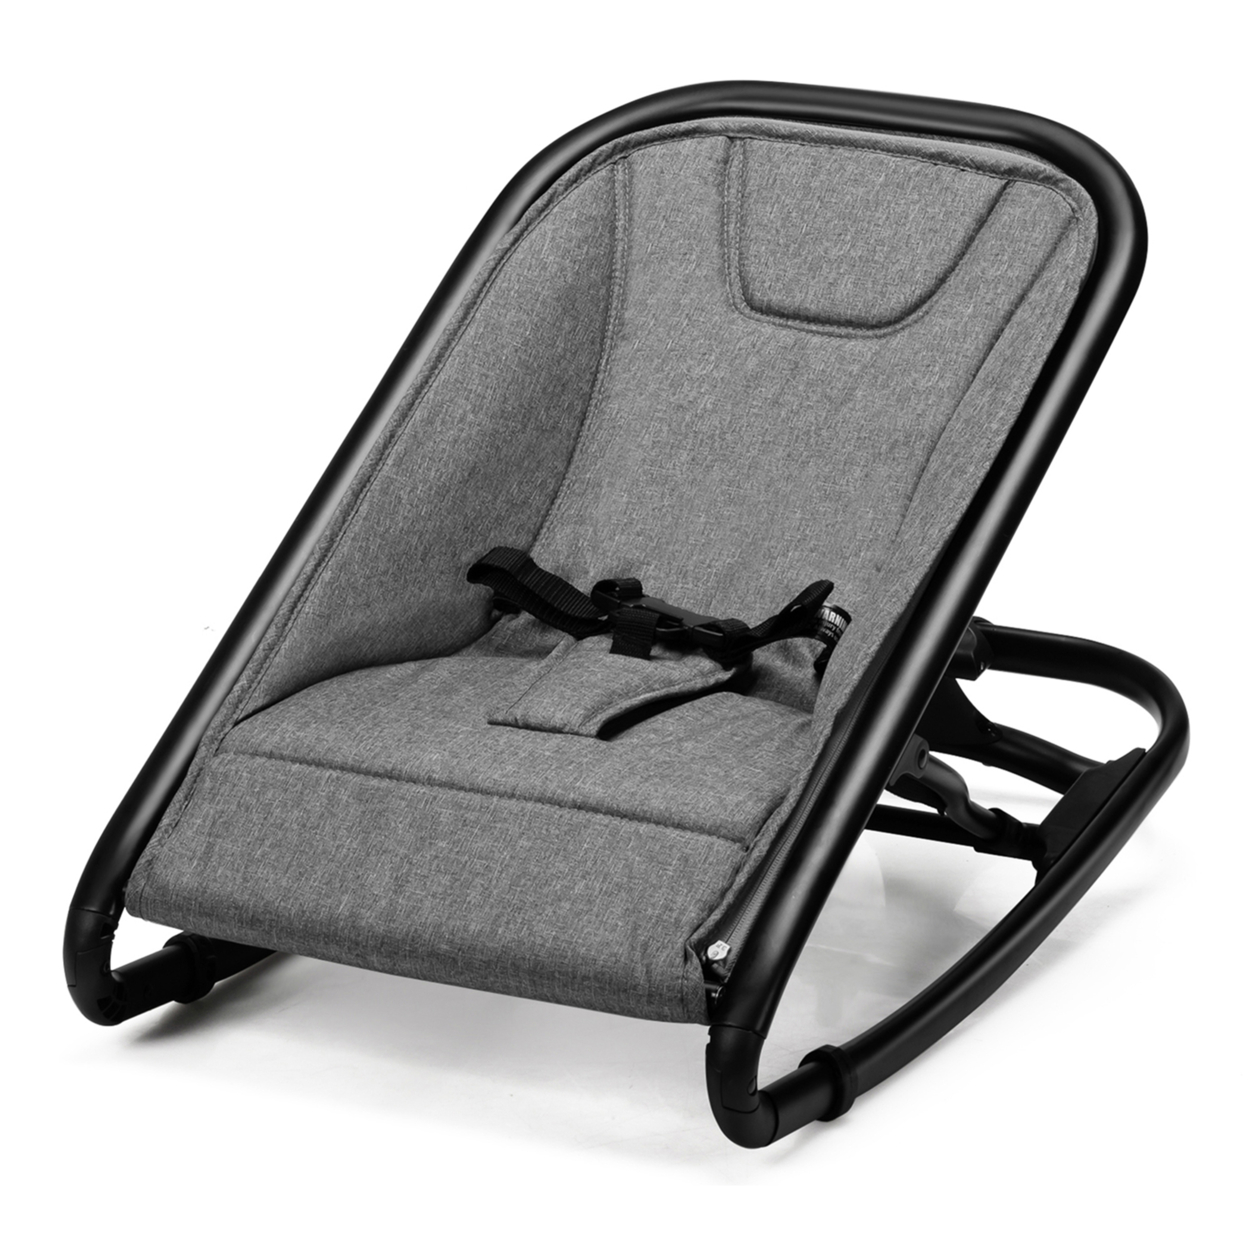 2 In 1 Folding Baby Rocker Bouncer Seat W/ 2 Adjustable Recline Positions - Light Grey